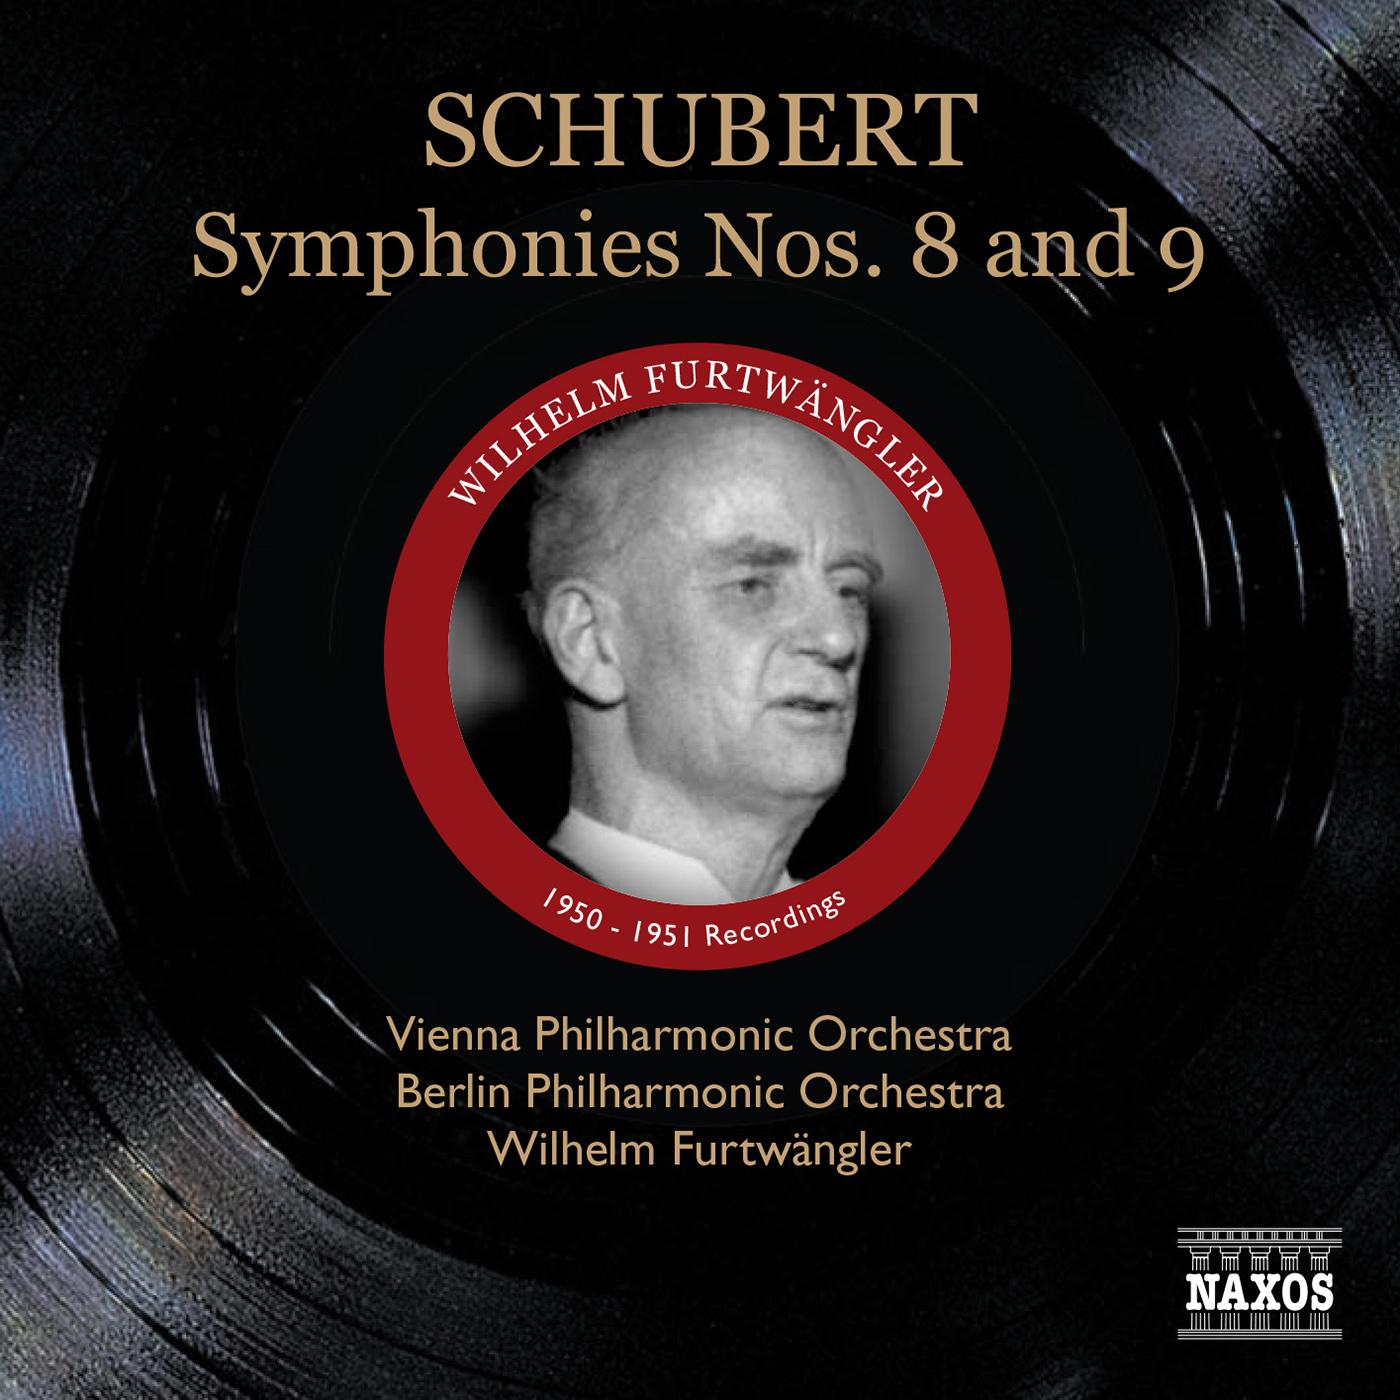 SCHUBERT, F.: Symphonies Nos. 8, "Unfinished" and 9, "Great" (Furtwangler) (1950-1951)